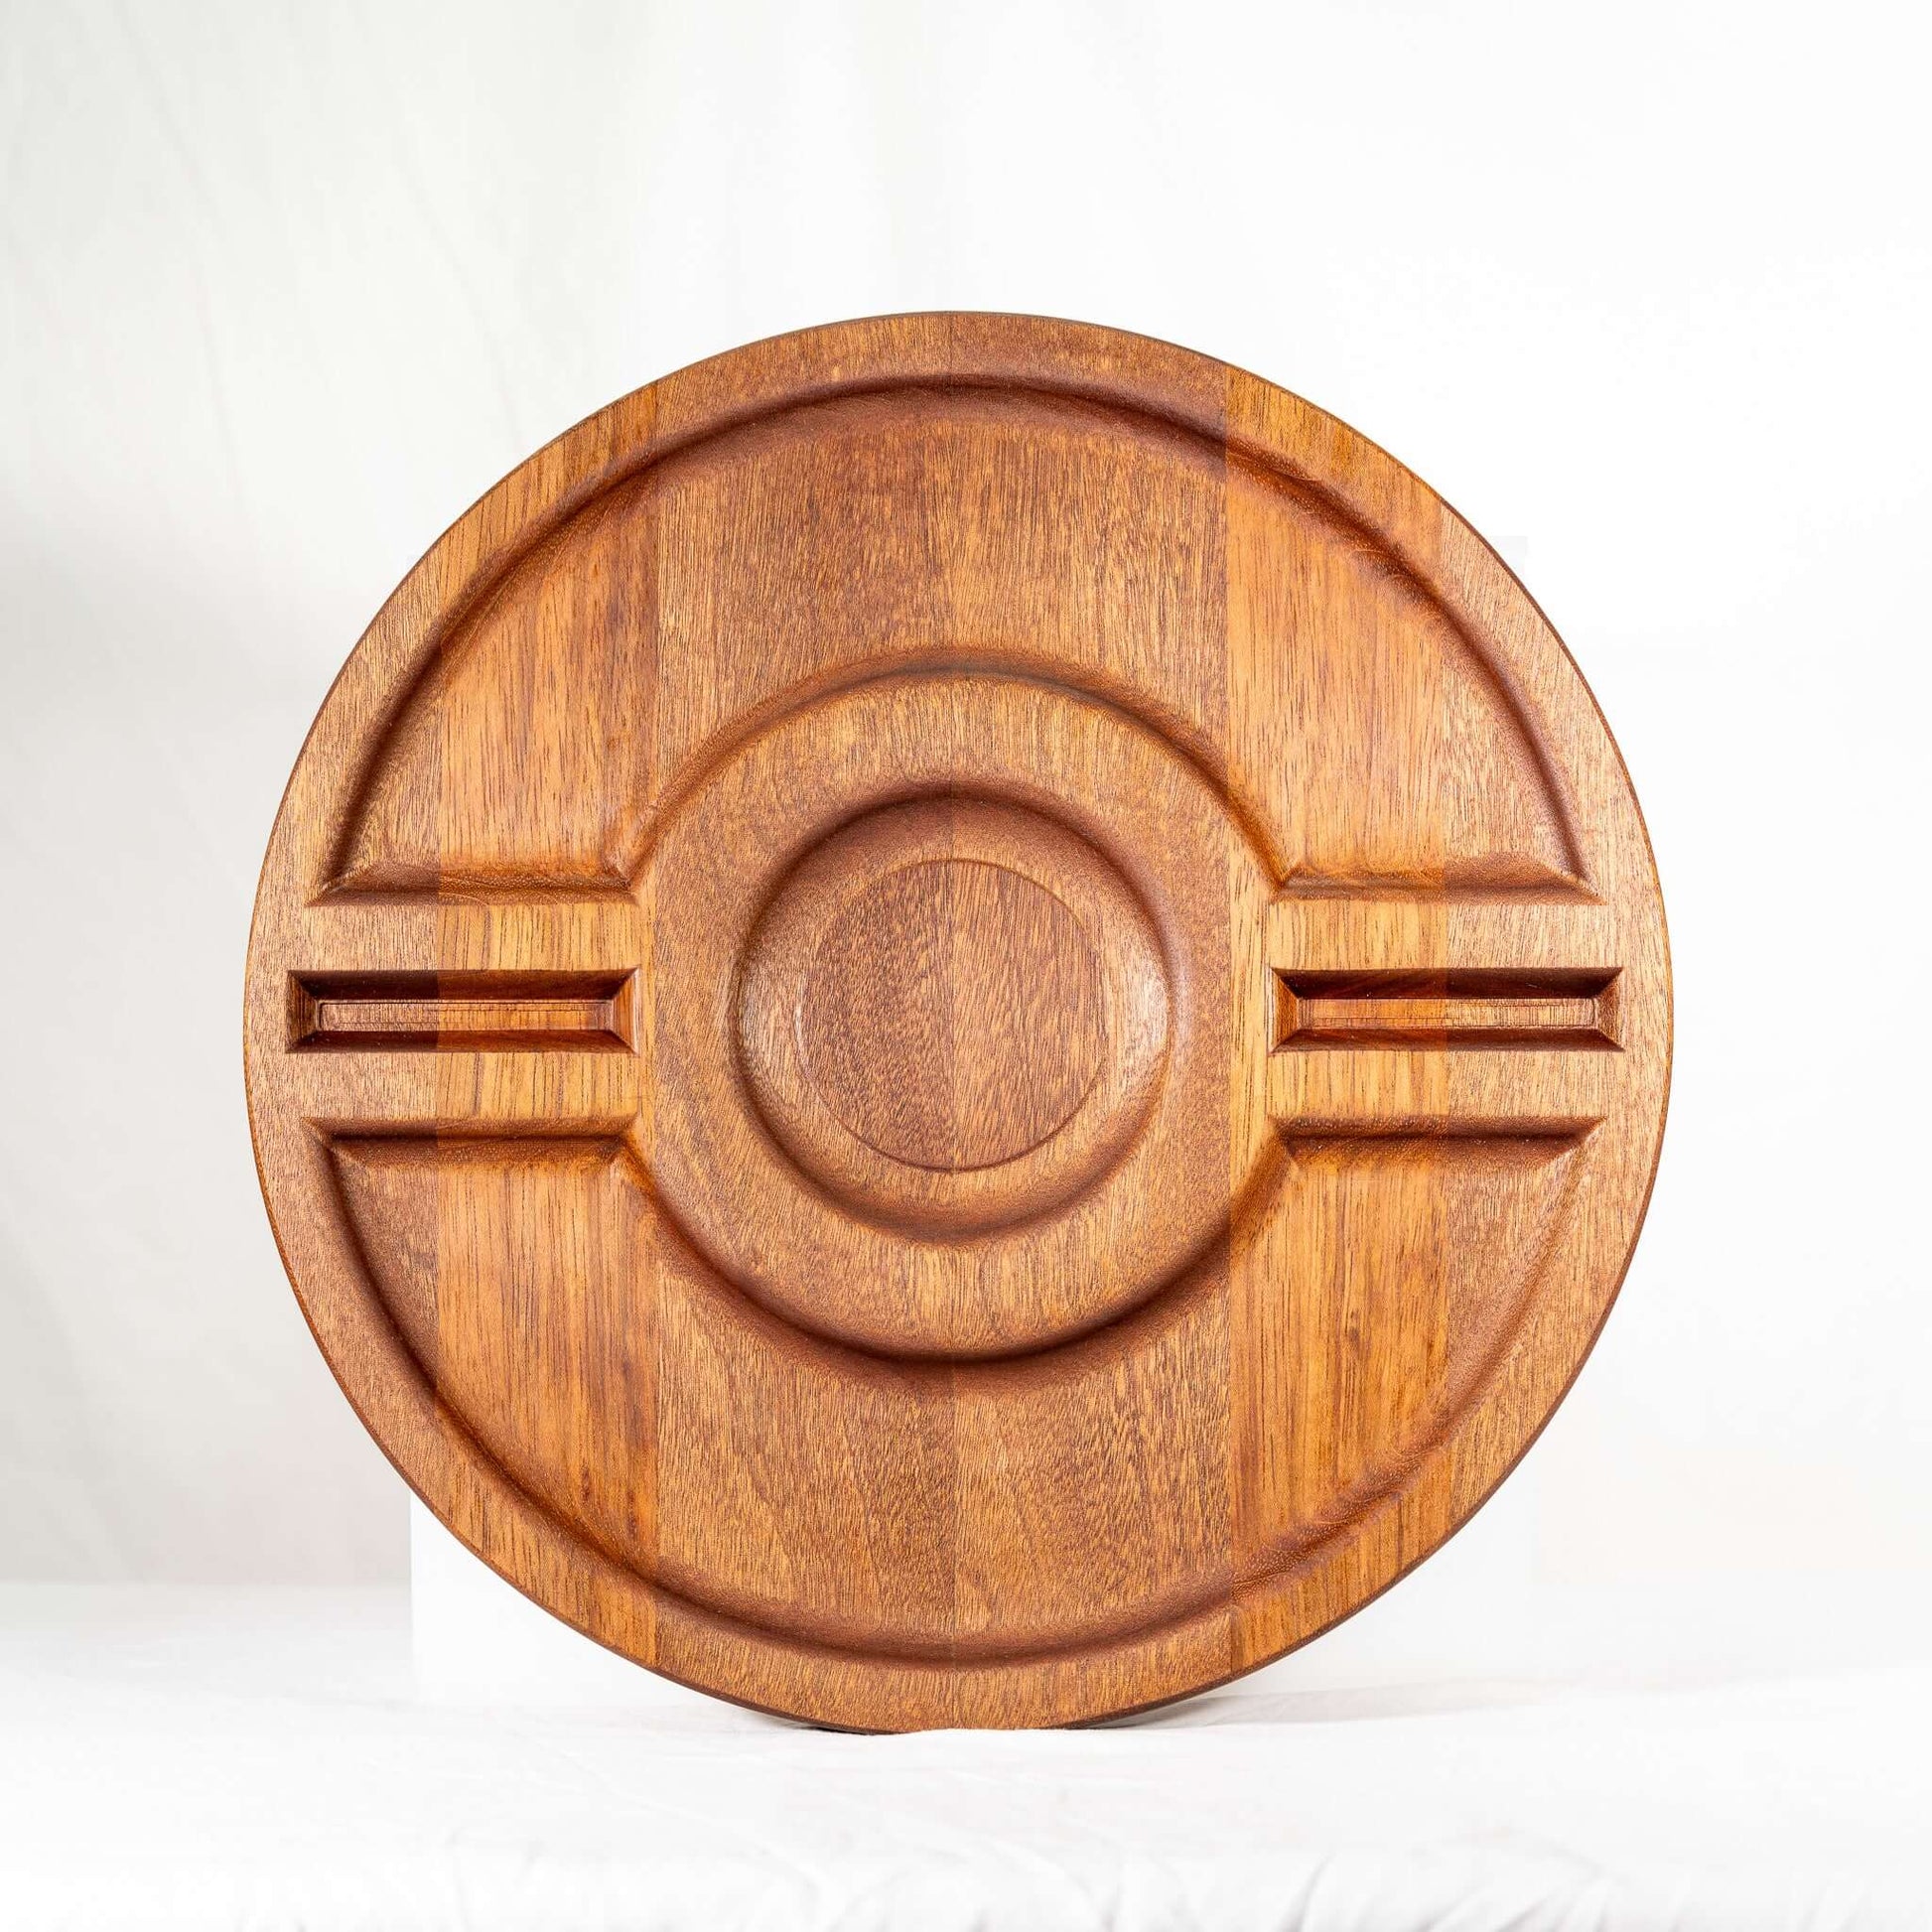 A solid, handmade Jatoba carved wood Pokémon Poké Ball party platter